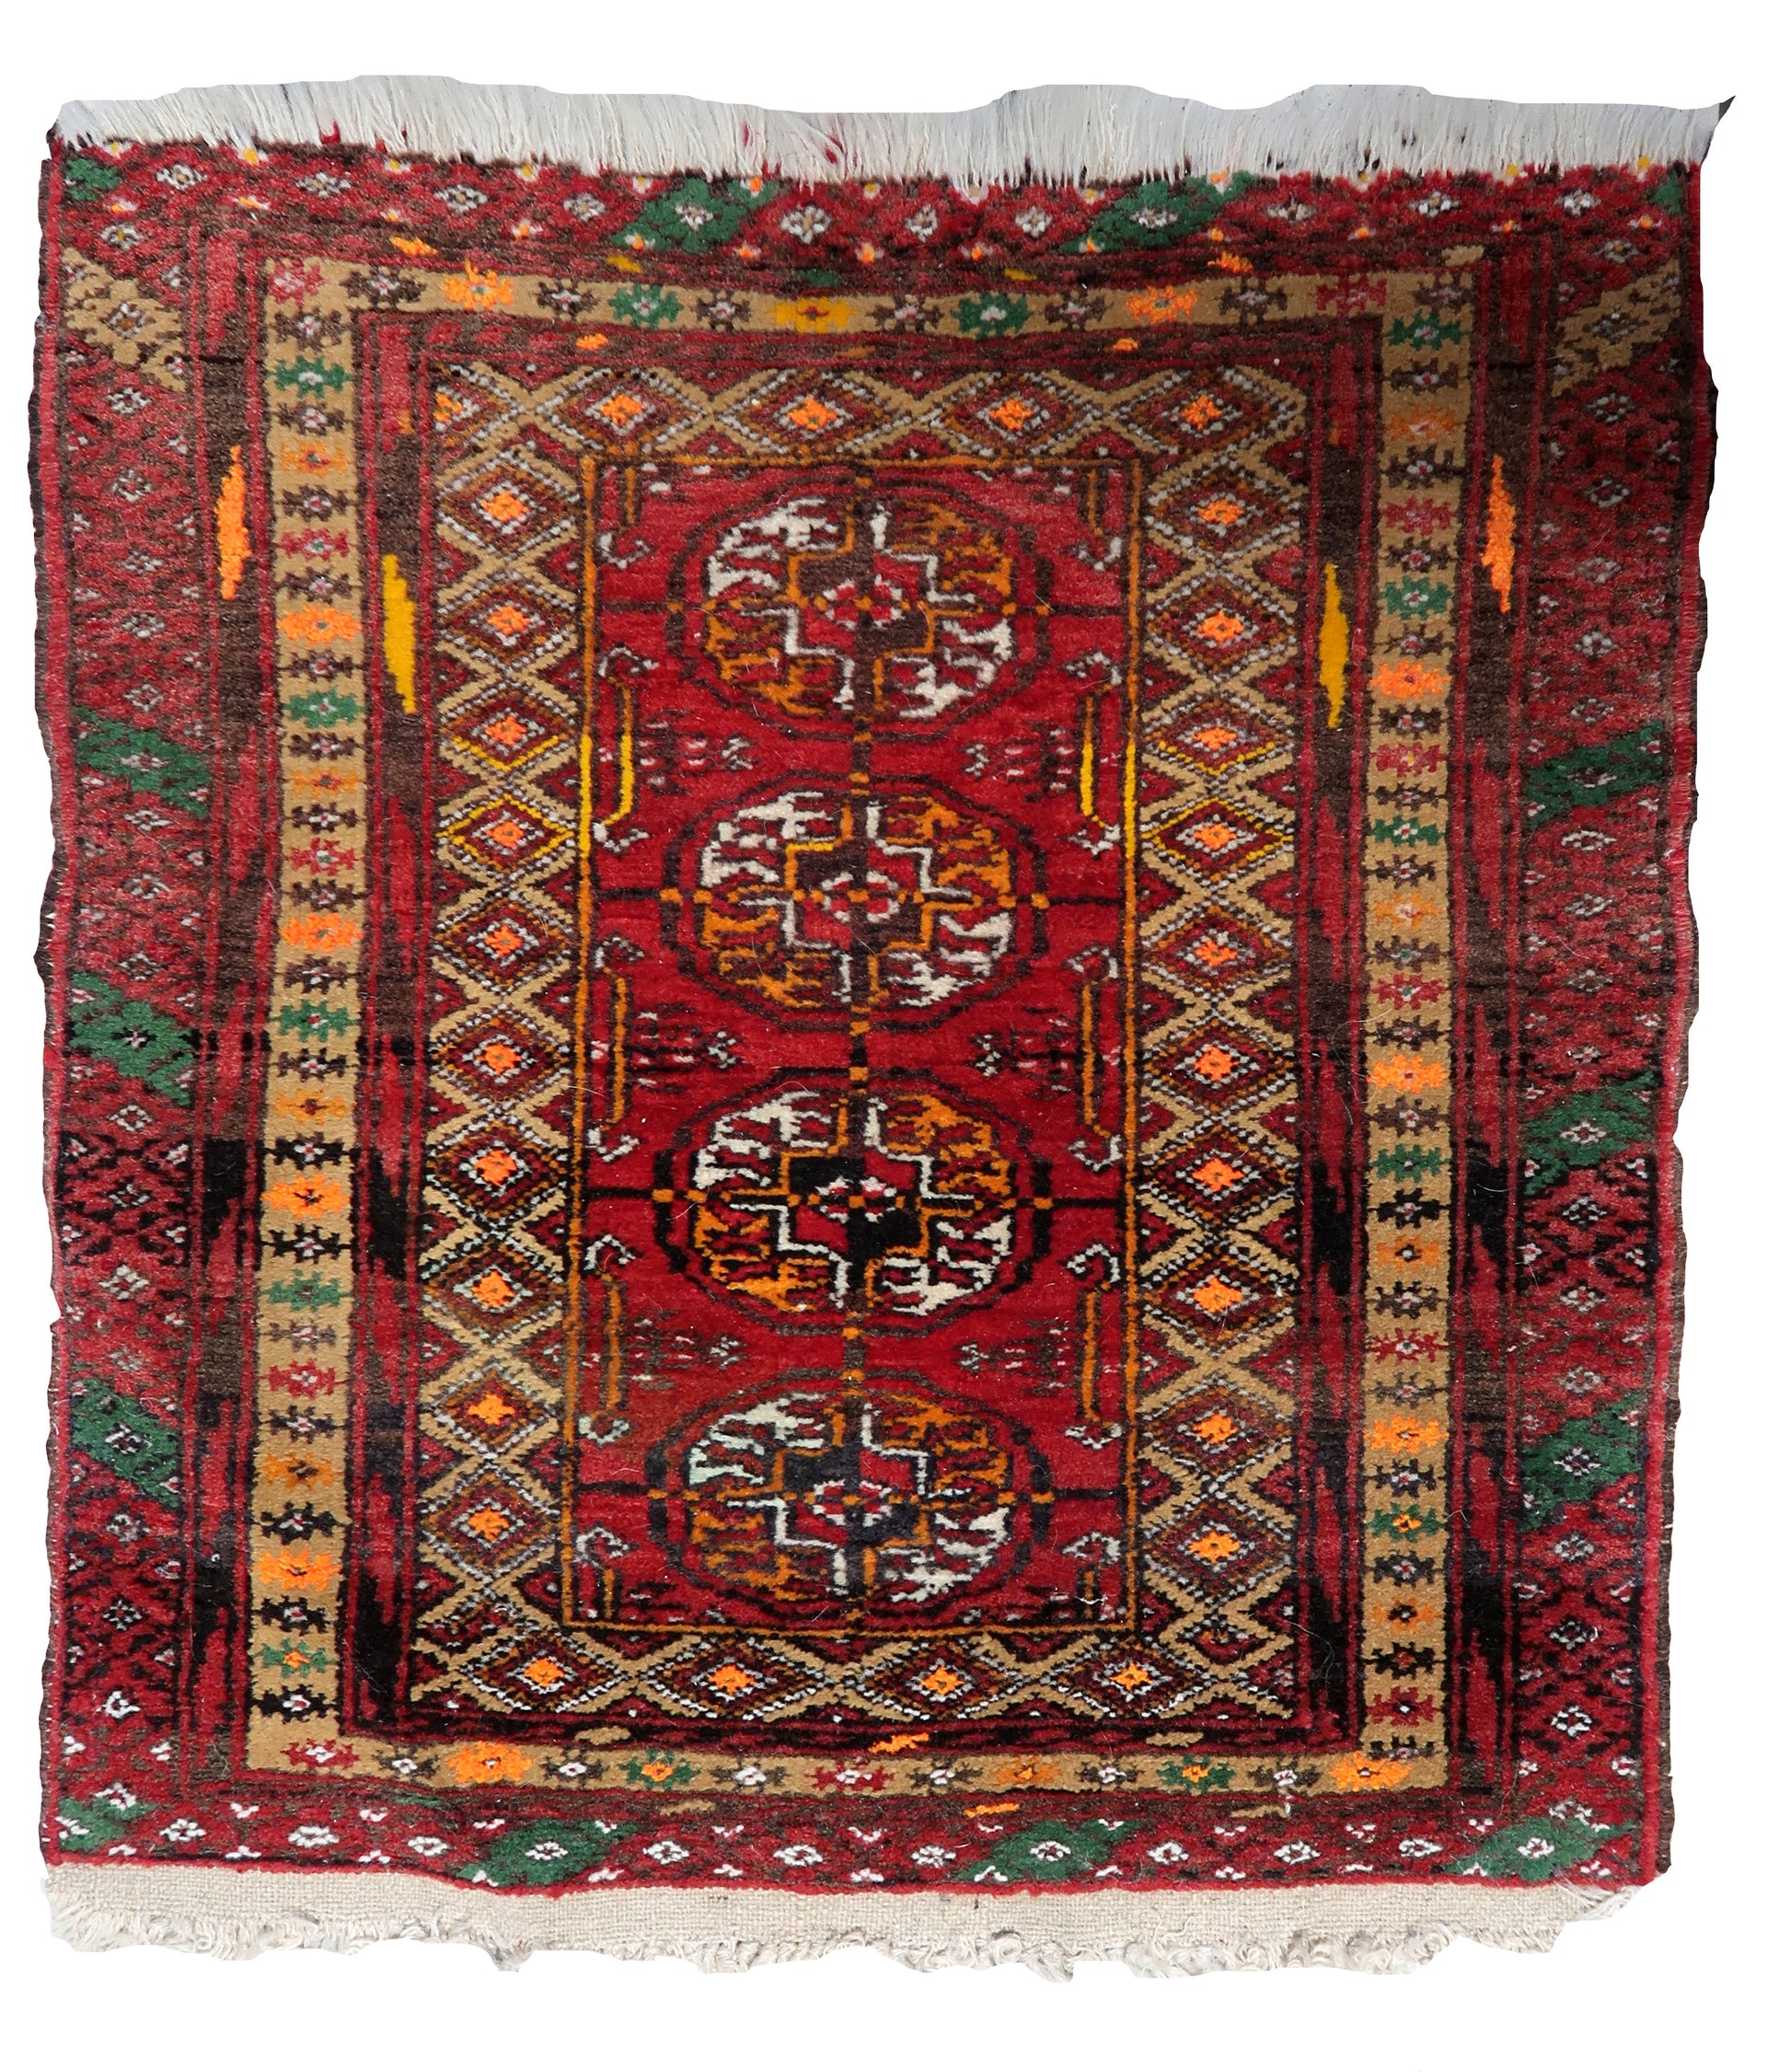 Handmade vintage Afghan Ersari mat showcasing vibrant colors and intricate patterns